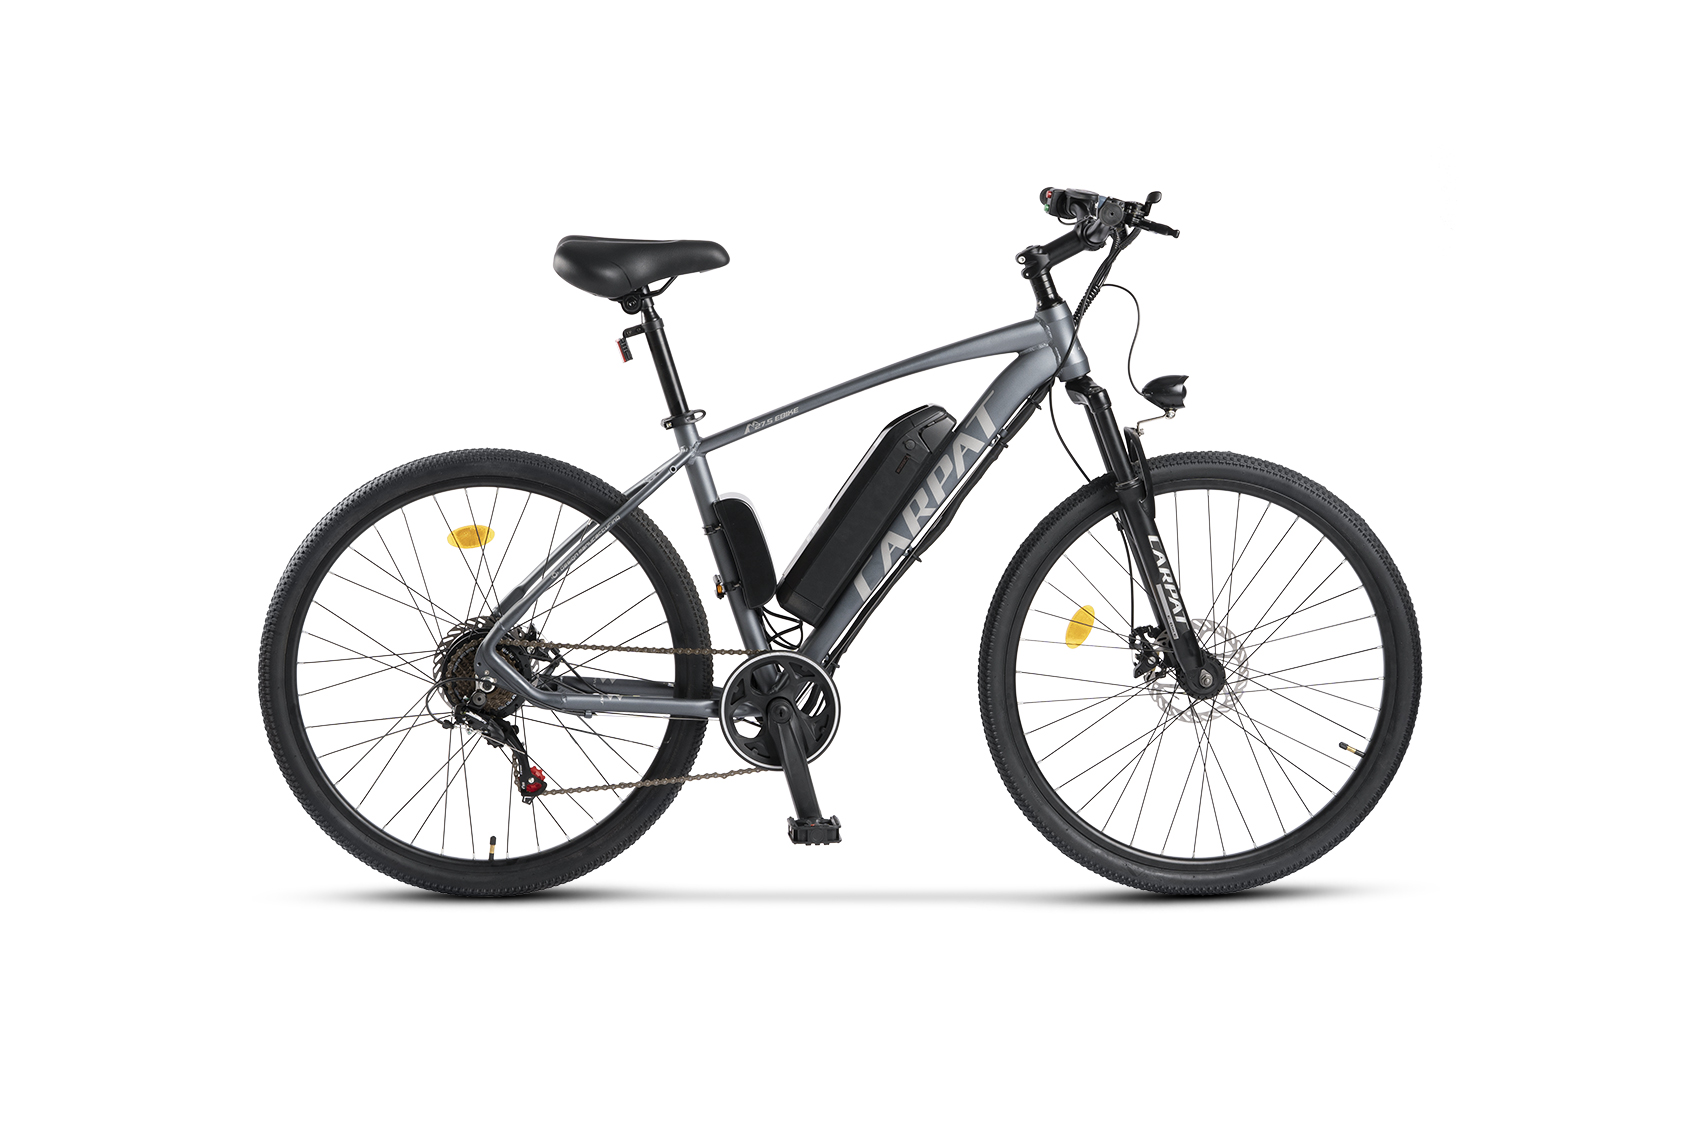 PROMO BICICLETE - Bicicleta Electrica (E-Bike) MTB Carpat C275X5E27.5", Gri, https:carpatsport.ro